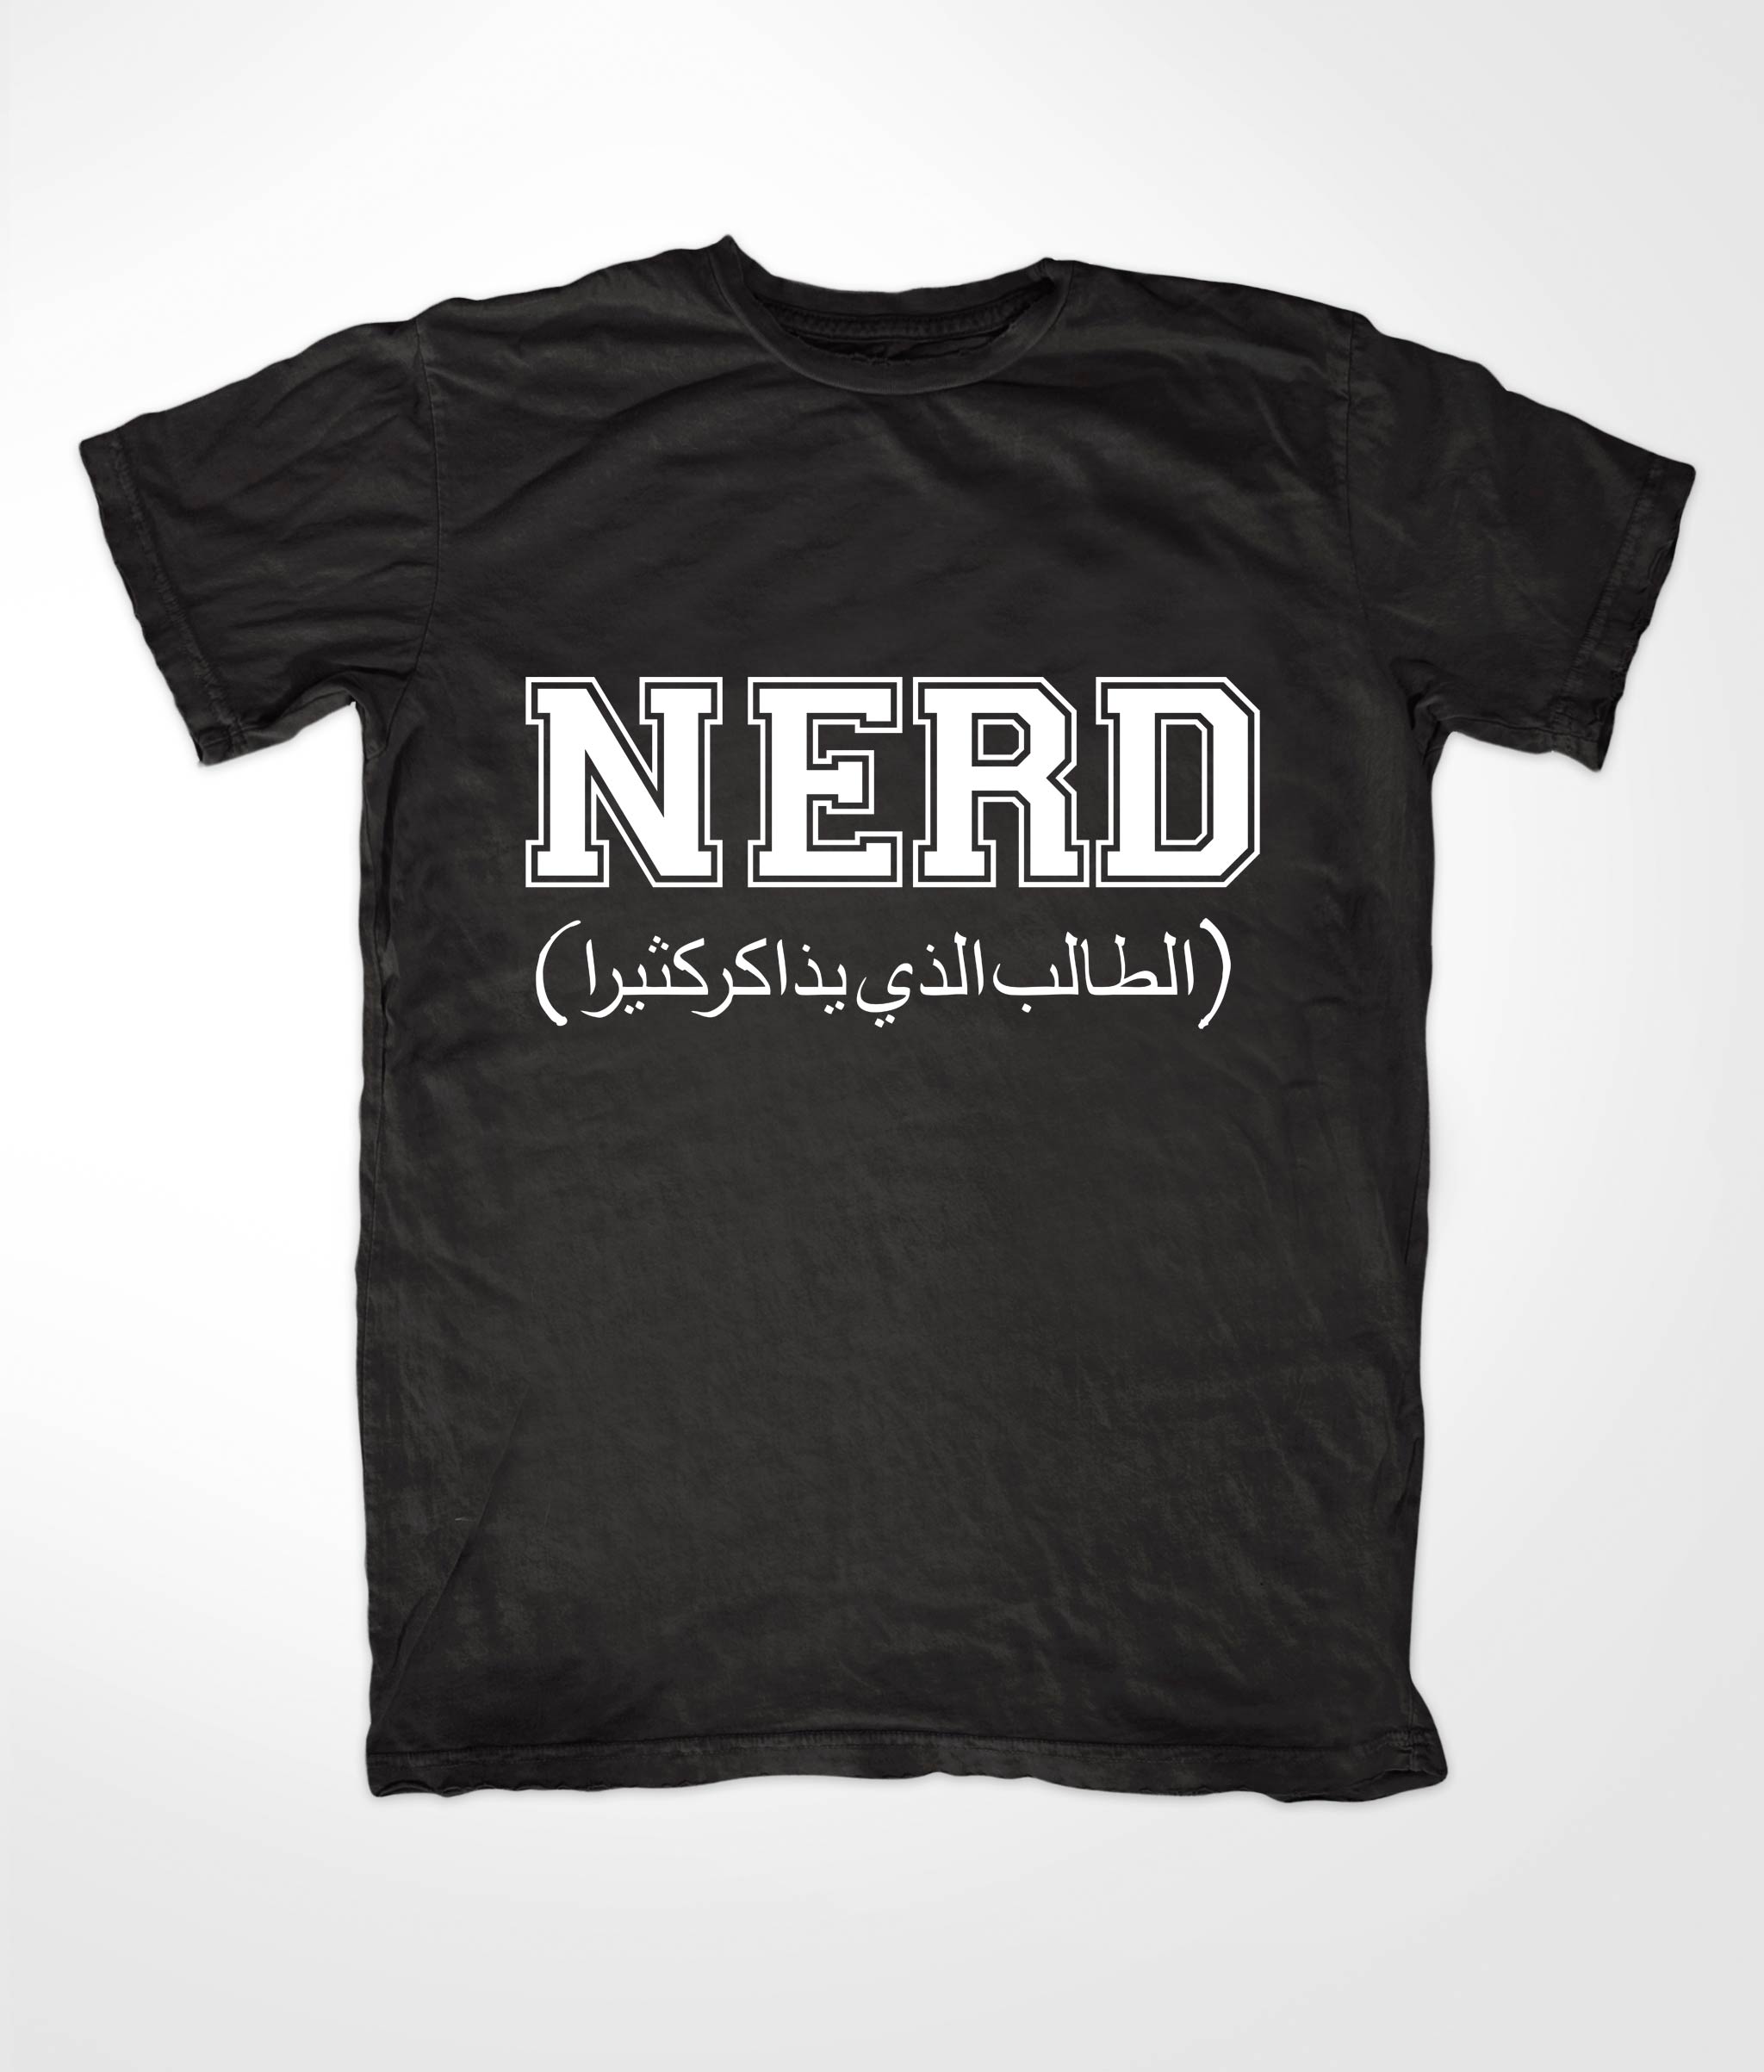 Nerd Islamic Black T-shirt